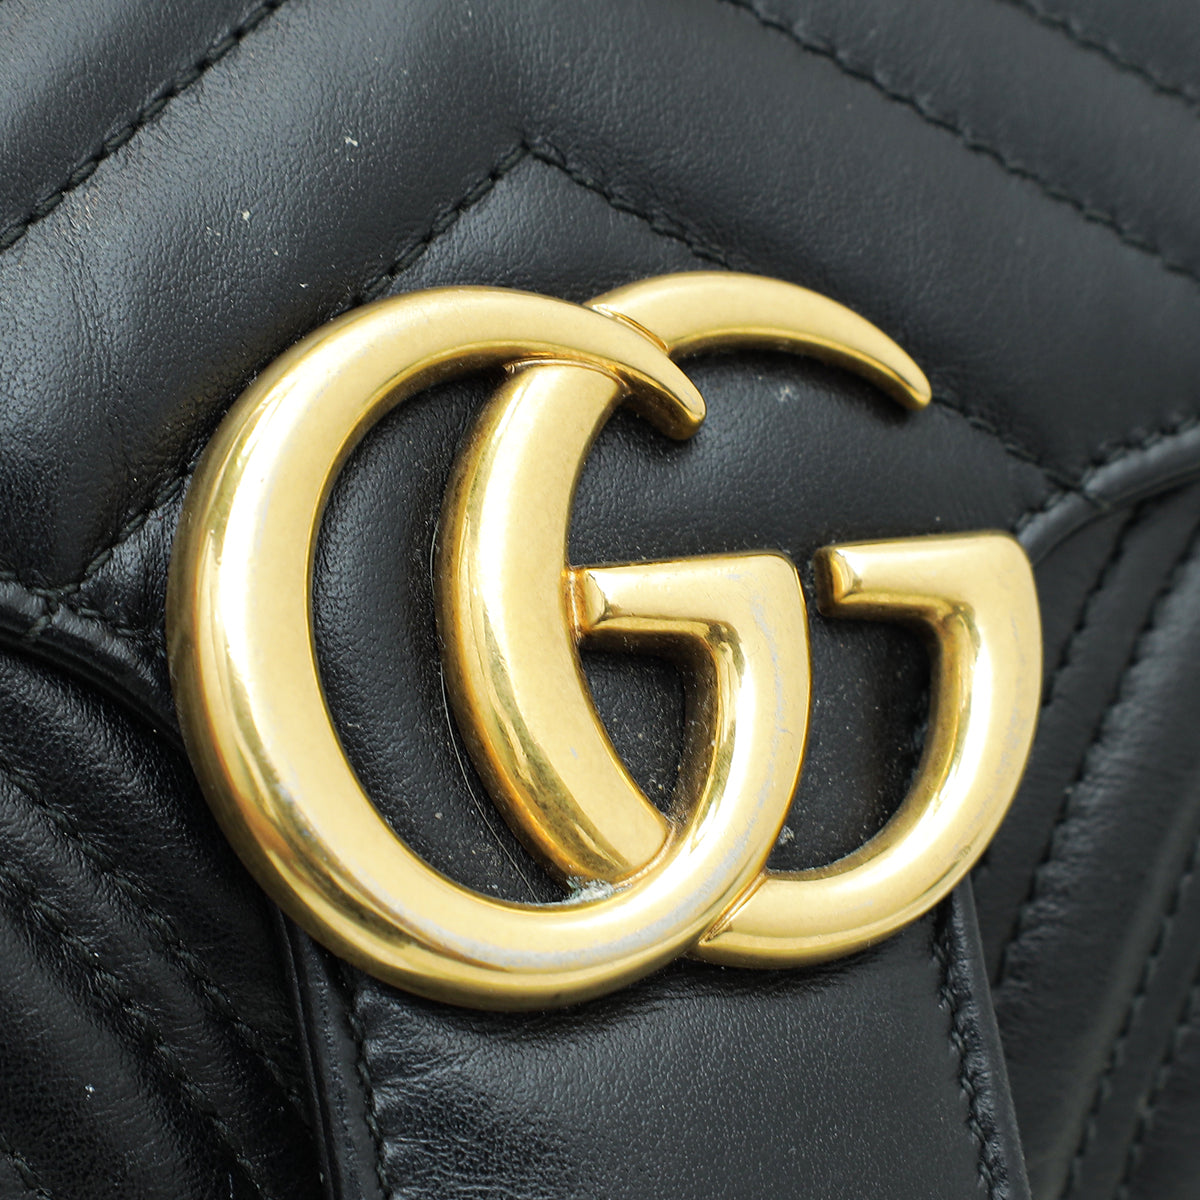 Gucci Black GG Marmont Matelasse Small Shoulder Bag